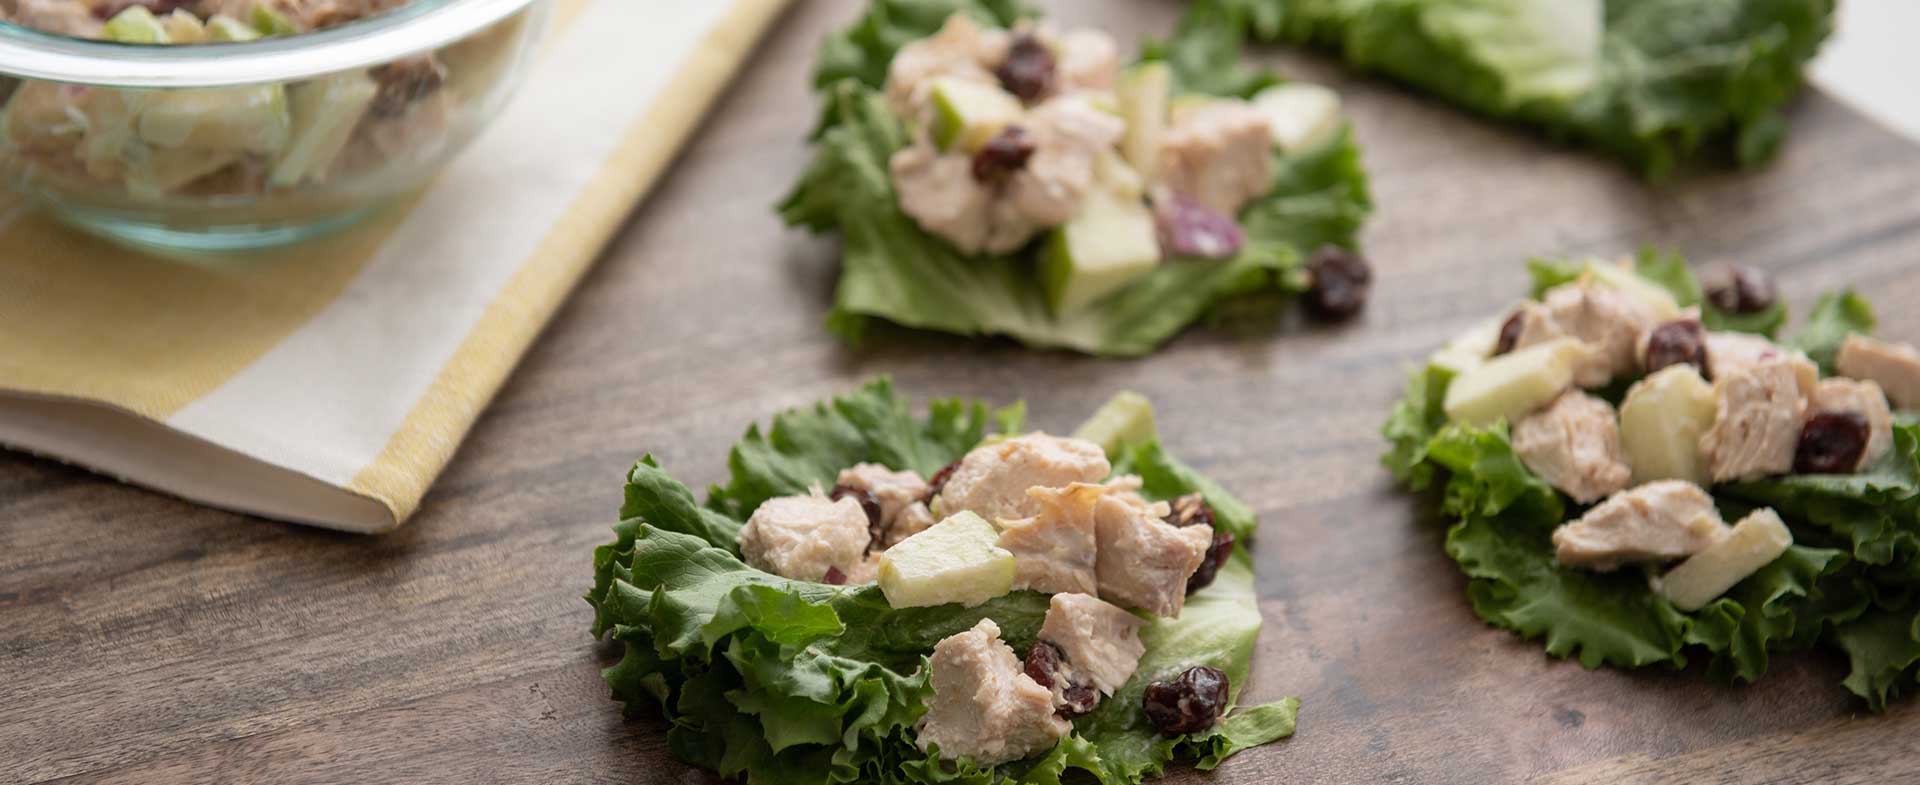 Michigan cherry chicken salad wraps recipe & video